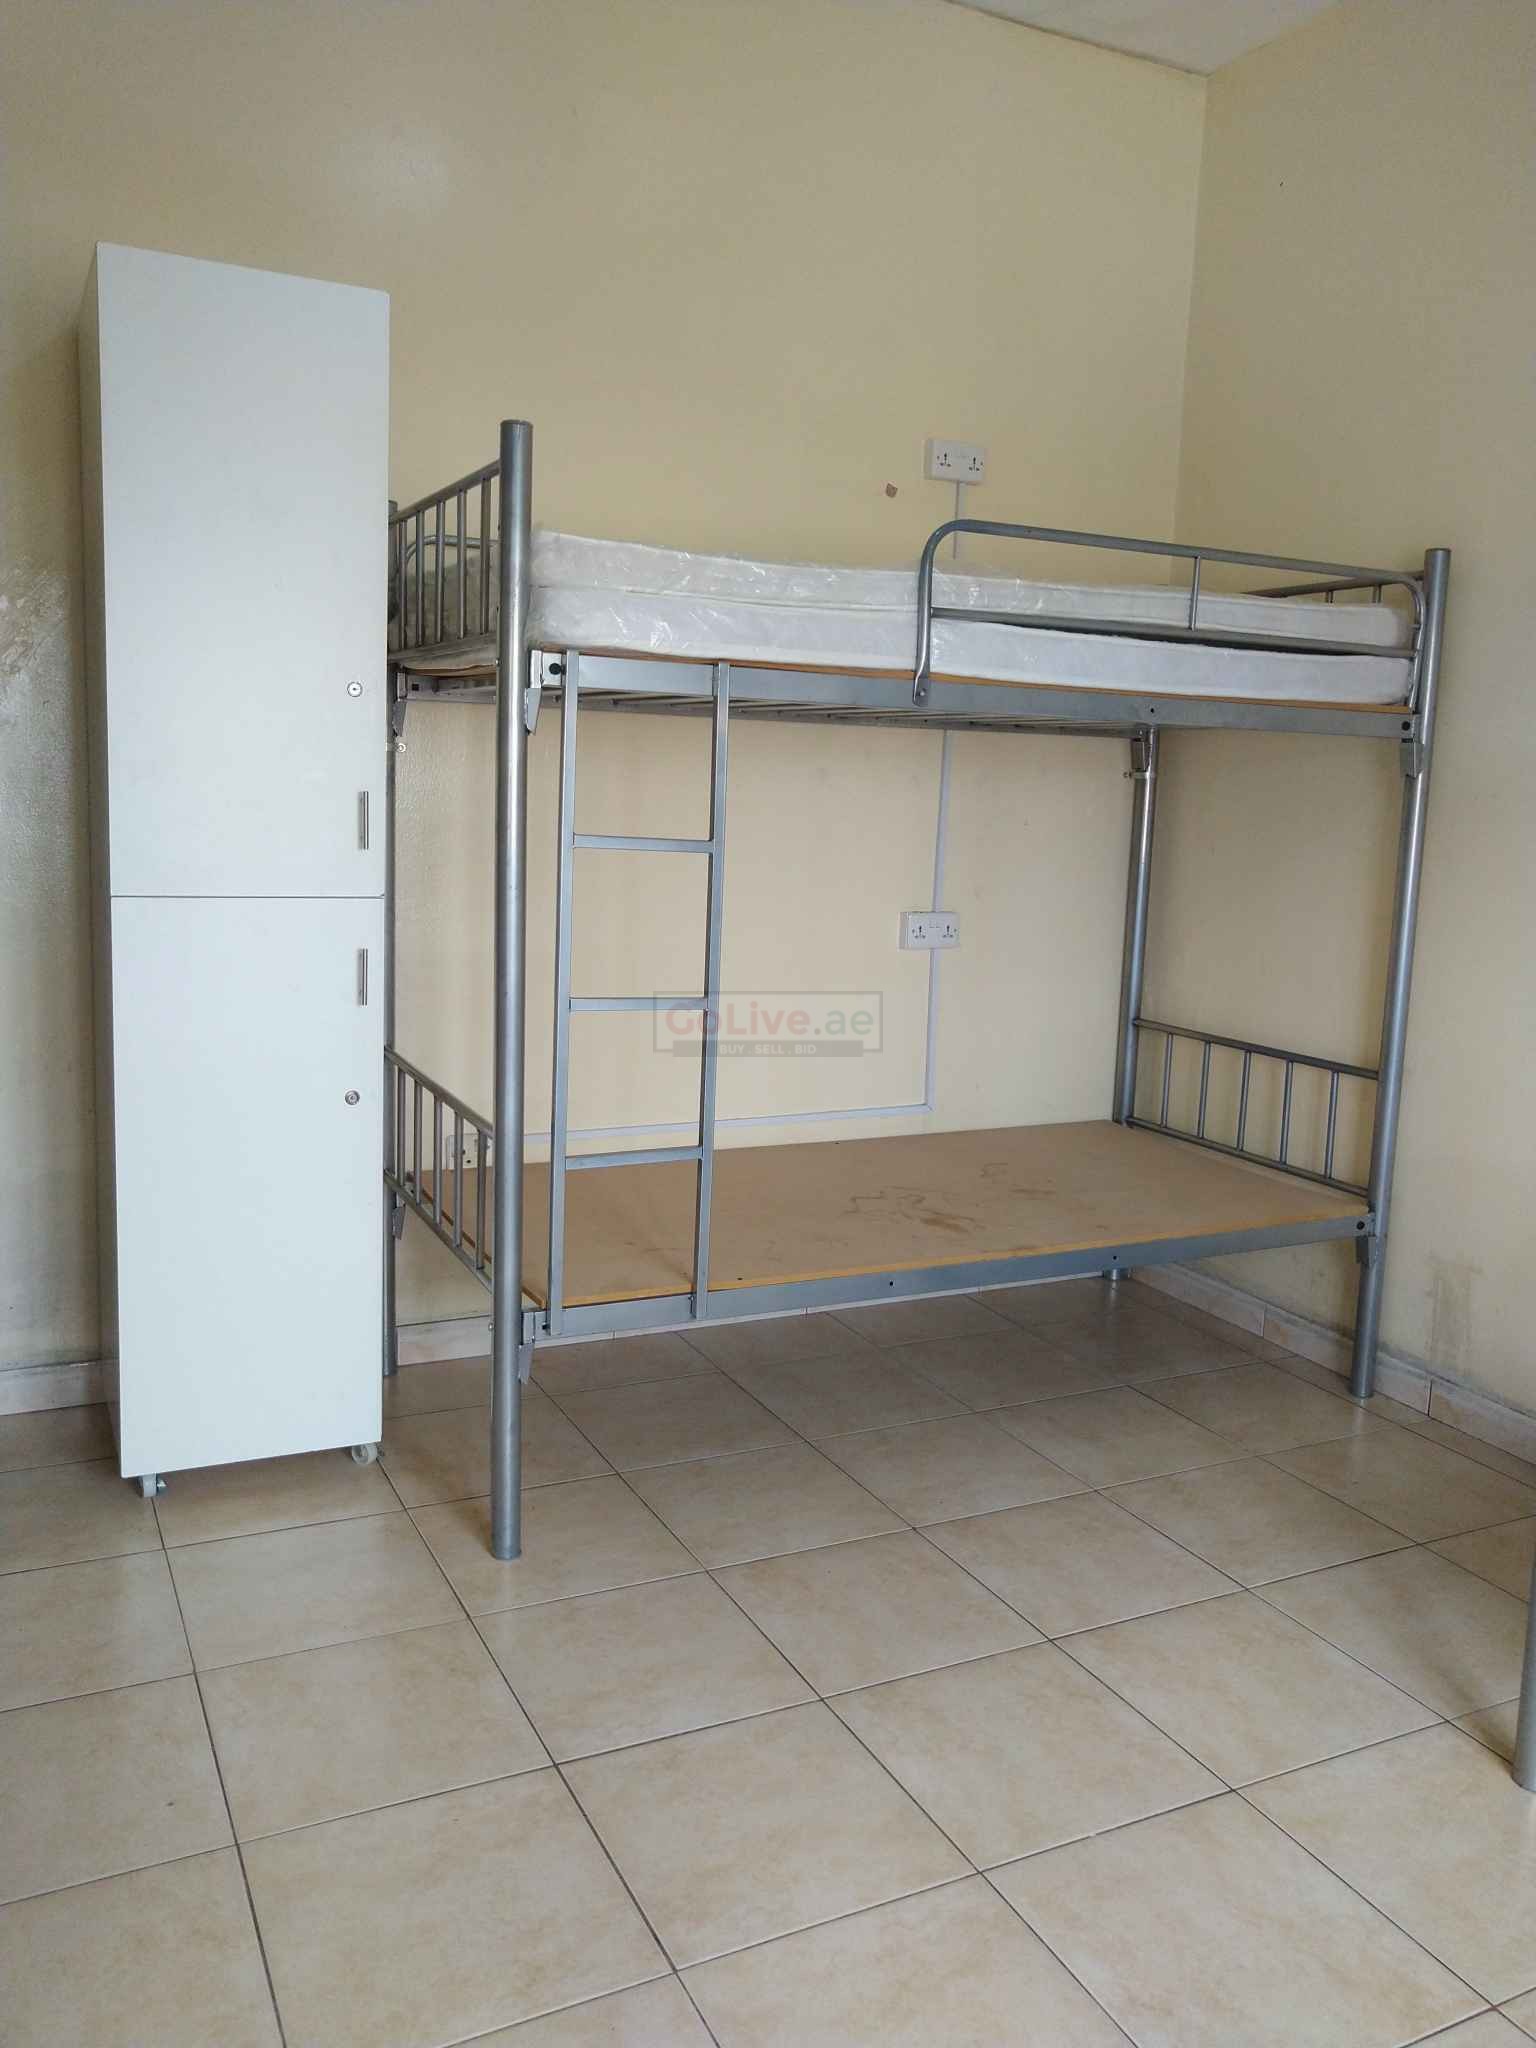 BED SPACE FOR LADIES 700/- / FAMILY ROOM at 2400/- AT BURDUBAI